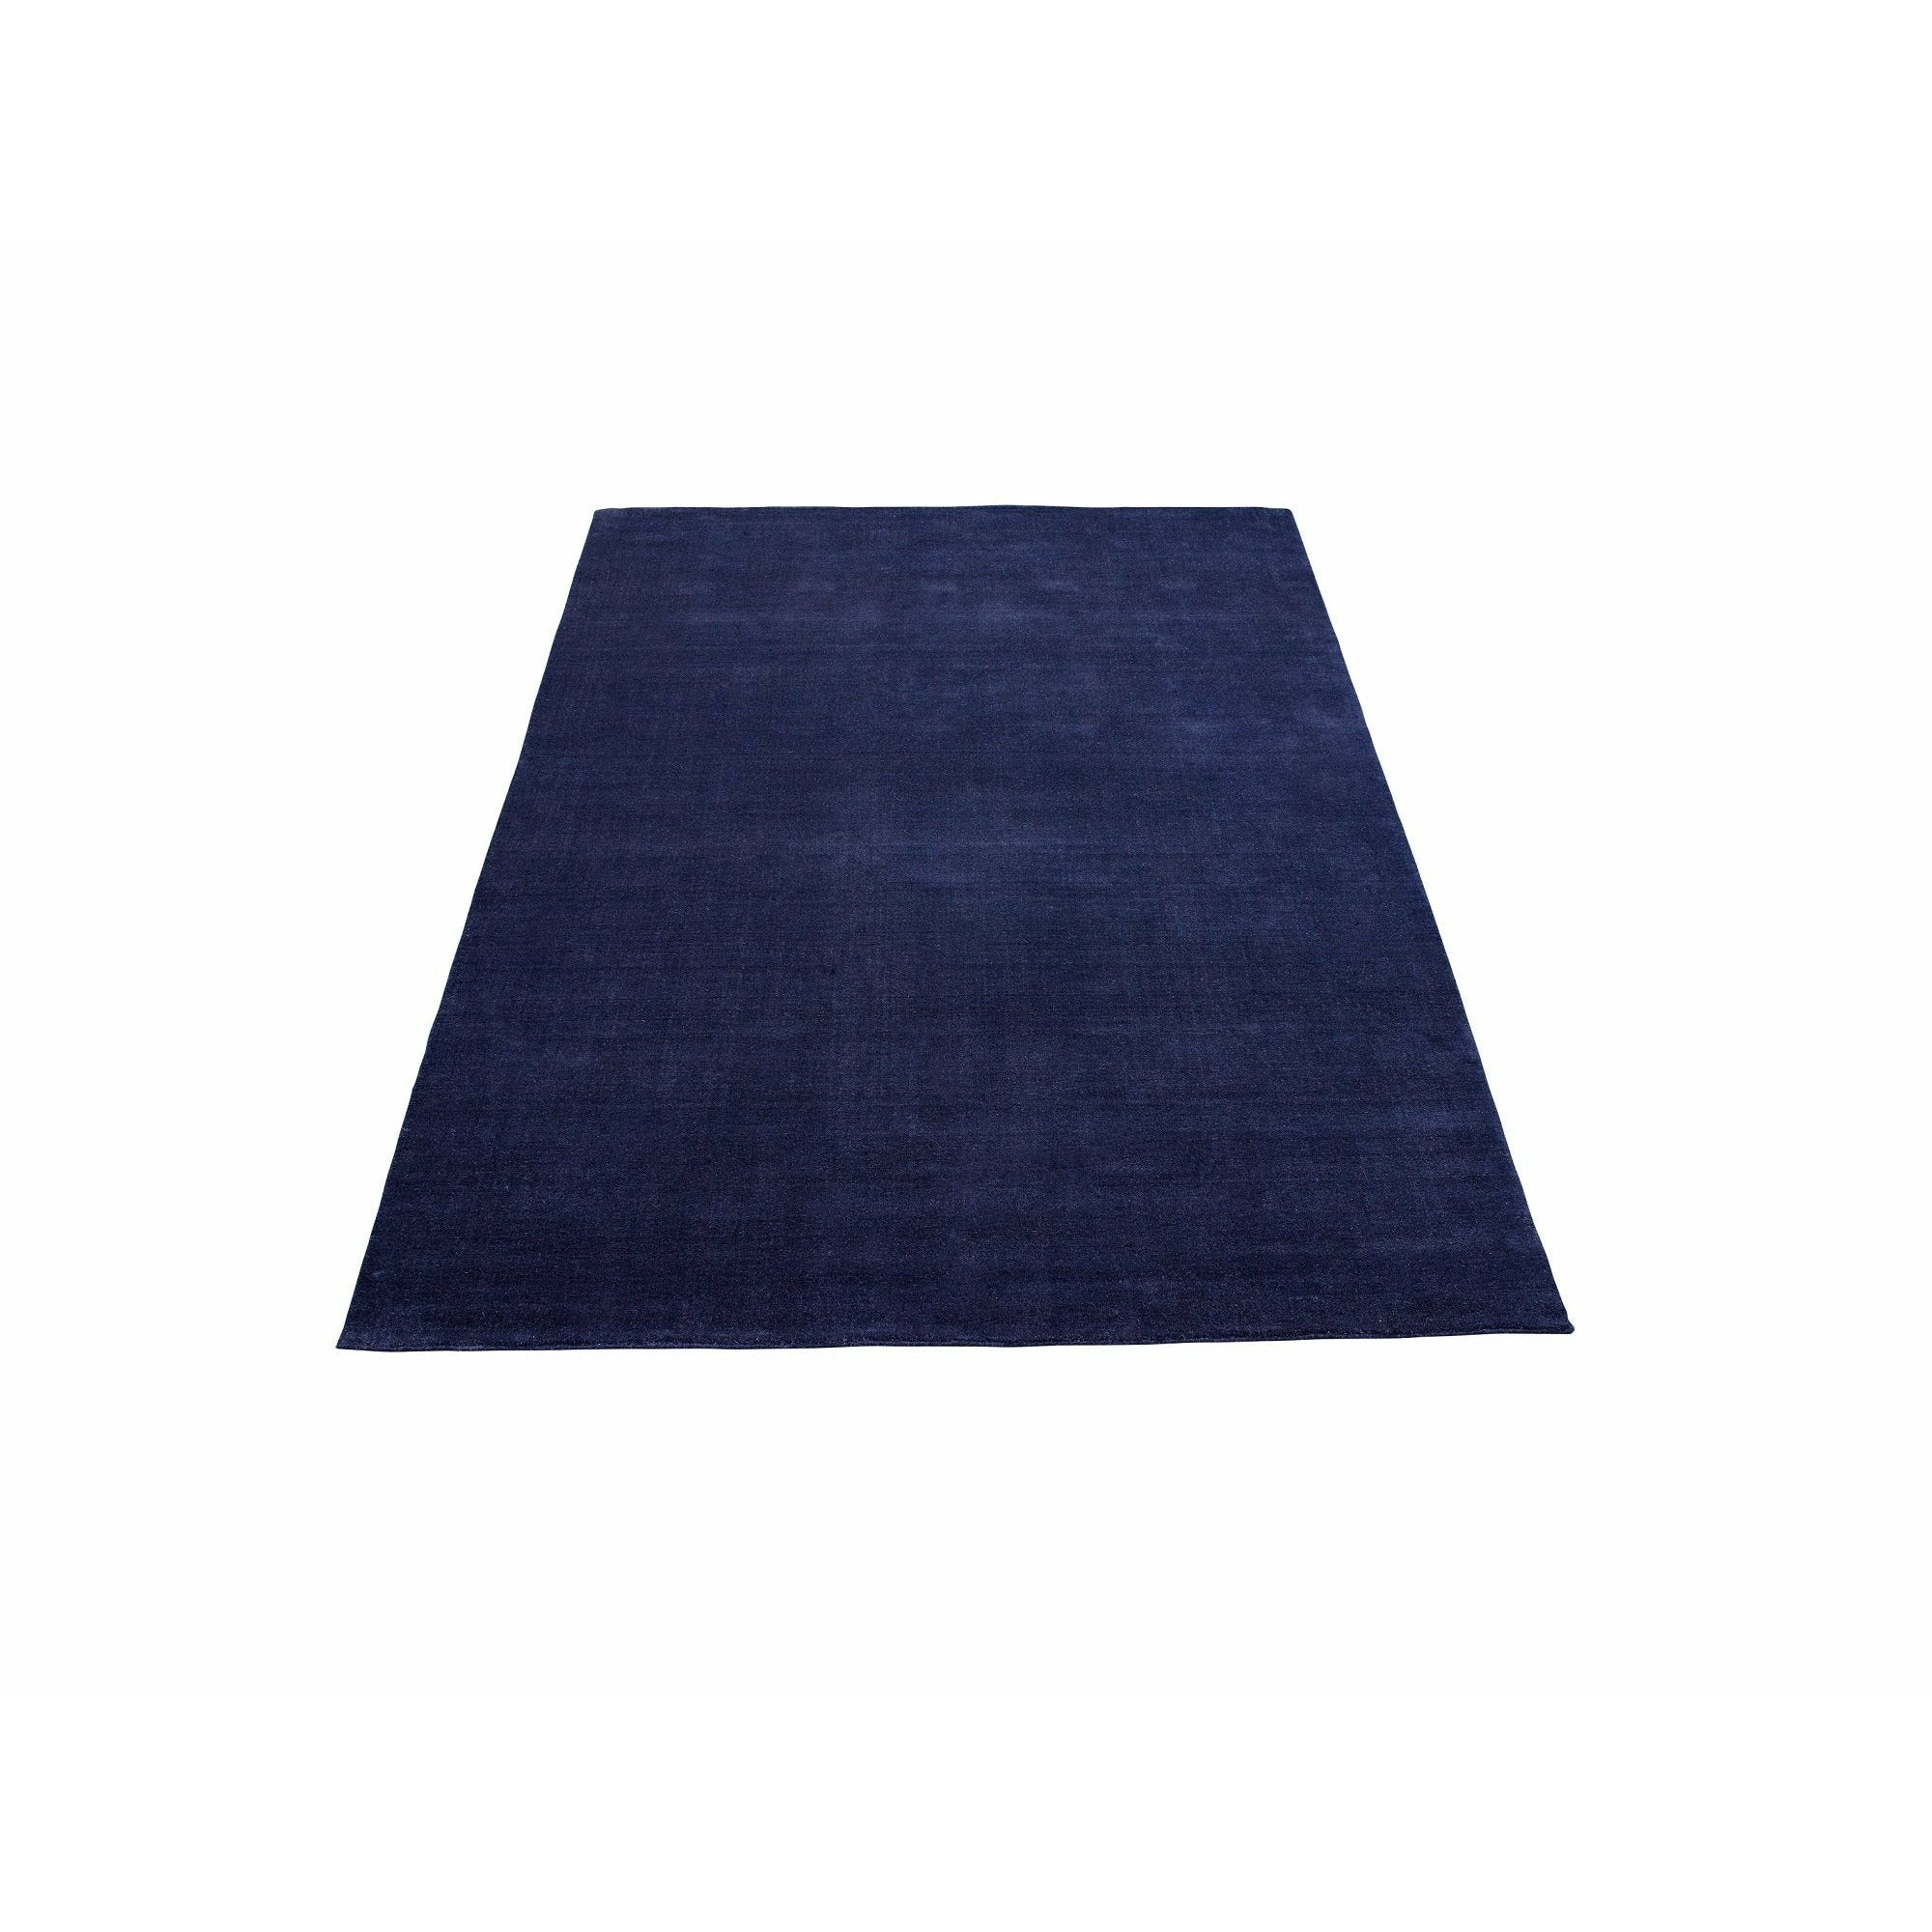 Massimo Earth Bamboo alfombra vibrante azul, 250x300 cm